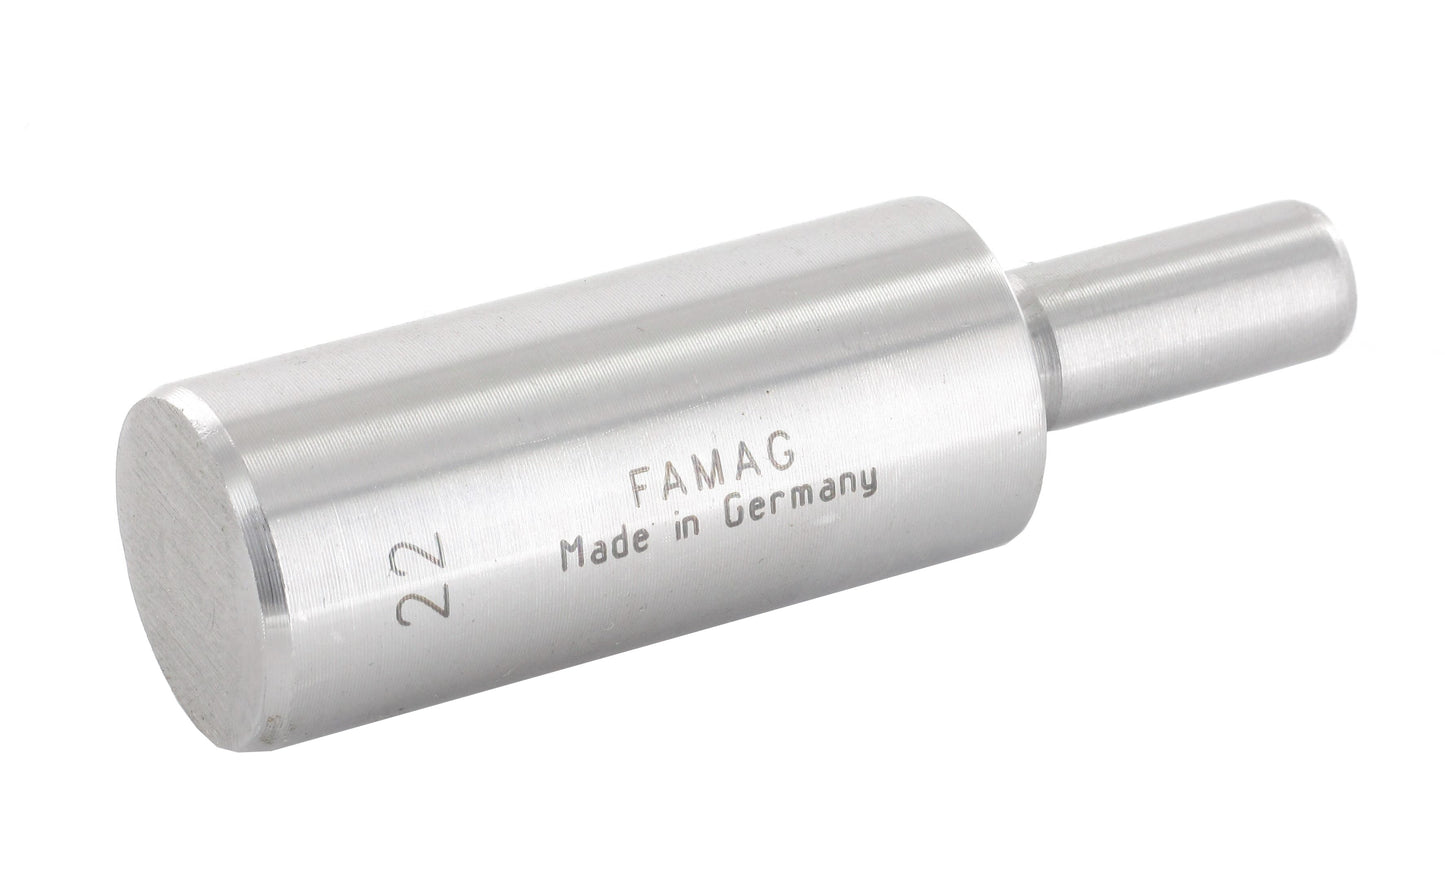 FAMAG 26 mm Guding Pin For Bormax 2.0 Prima 1614 Long Series 44.45mm - 120mm, 1619026